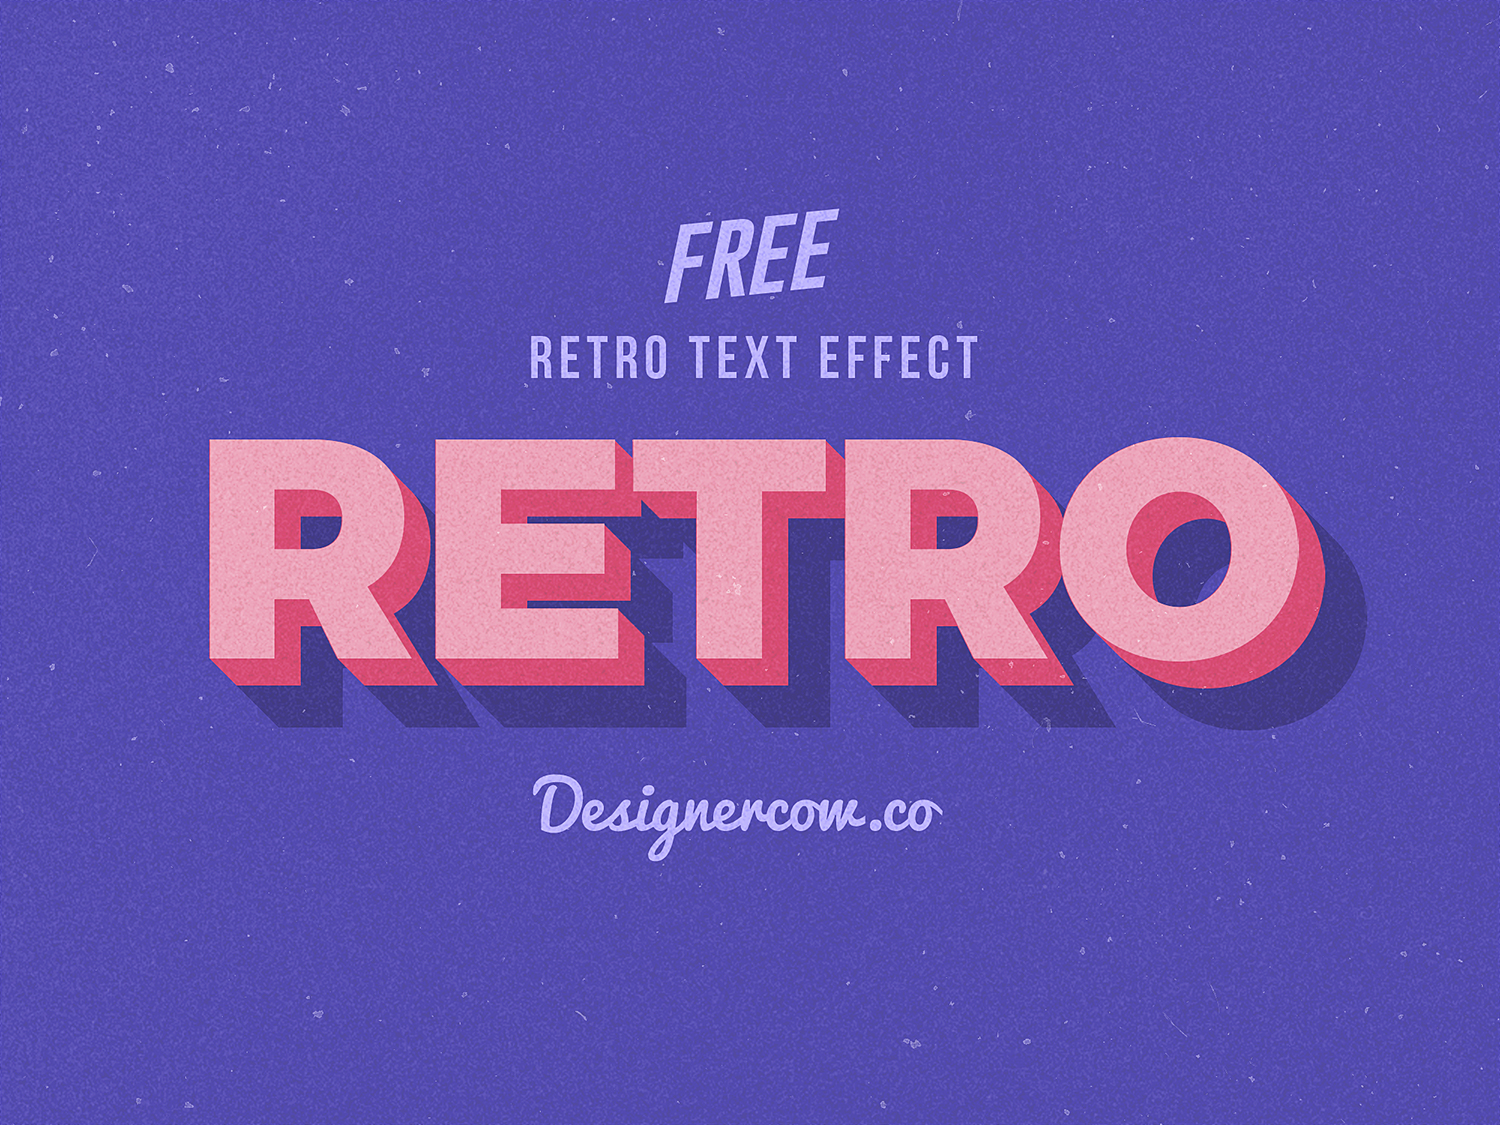 Download Free 3D Retro Text Effect | Mockup World HQ